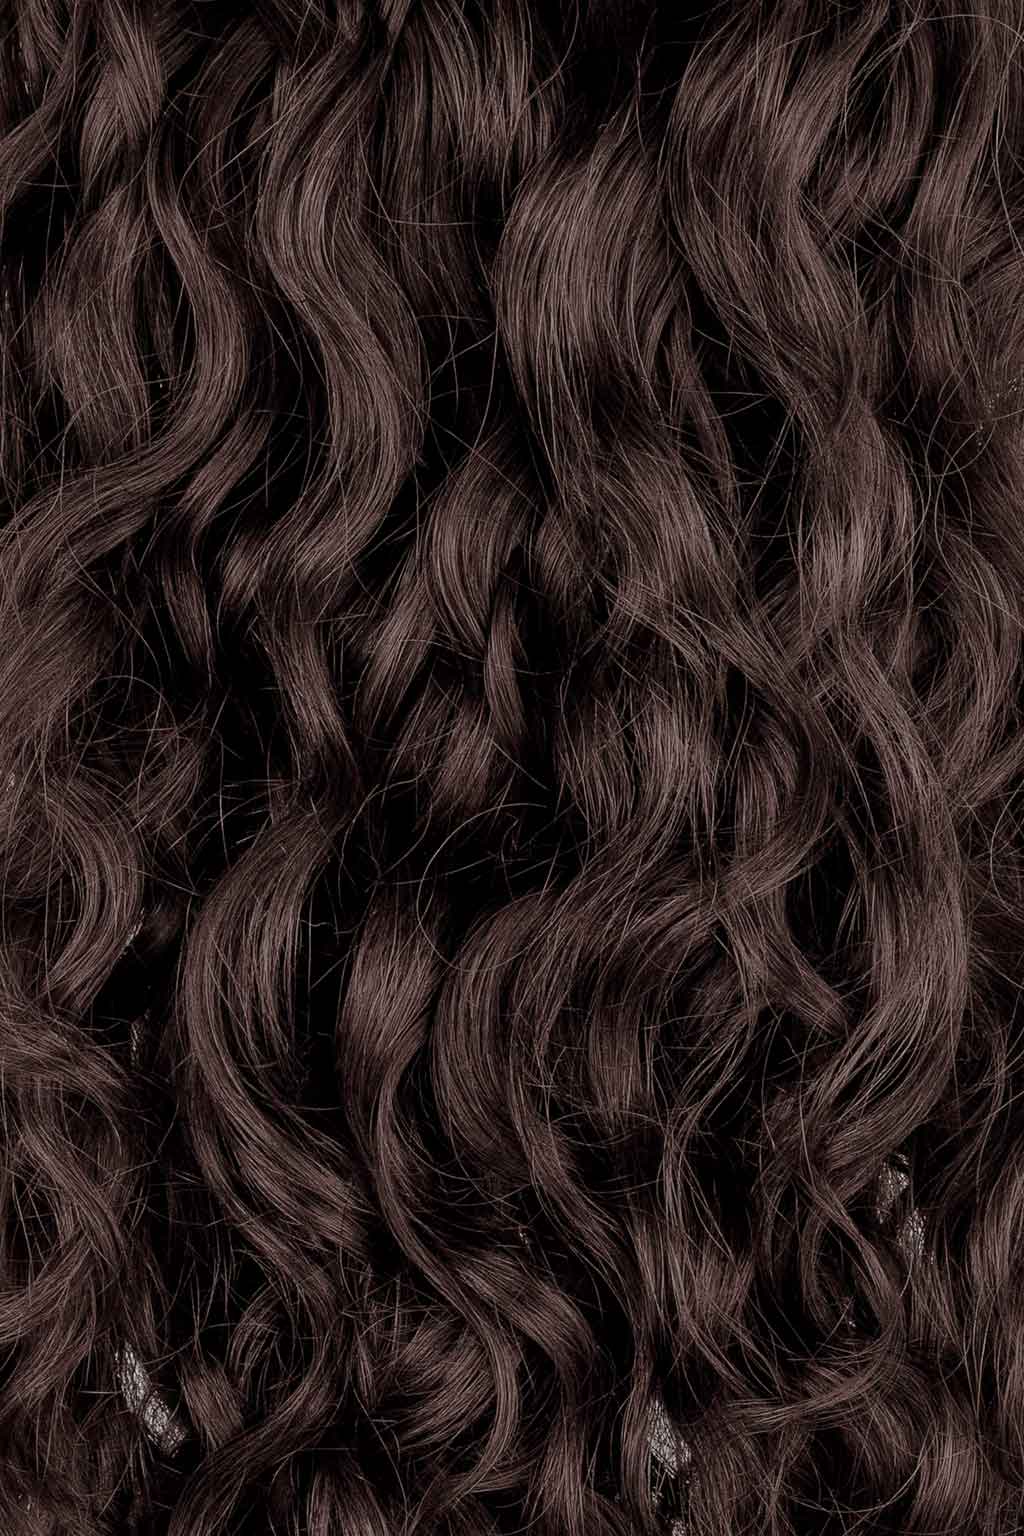 Neutral Dark Brown Curly Ponytail Extension